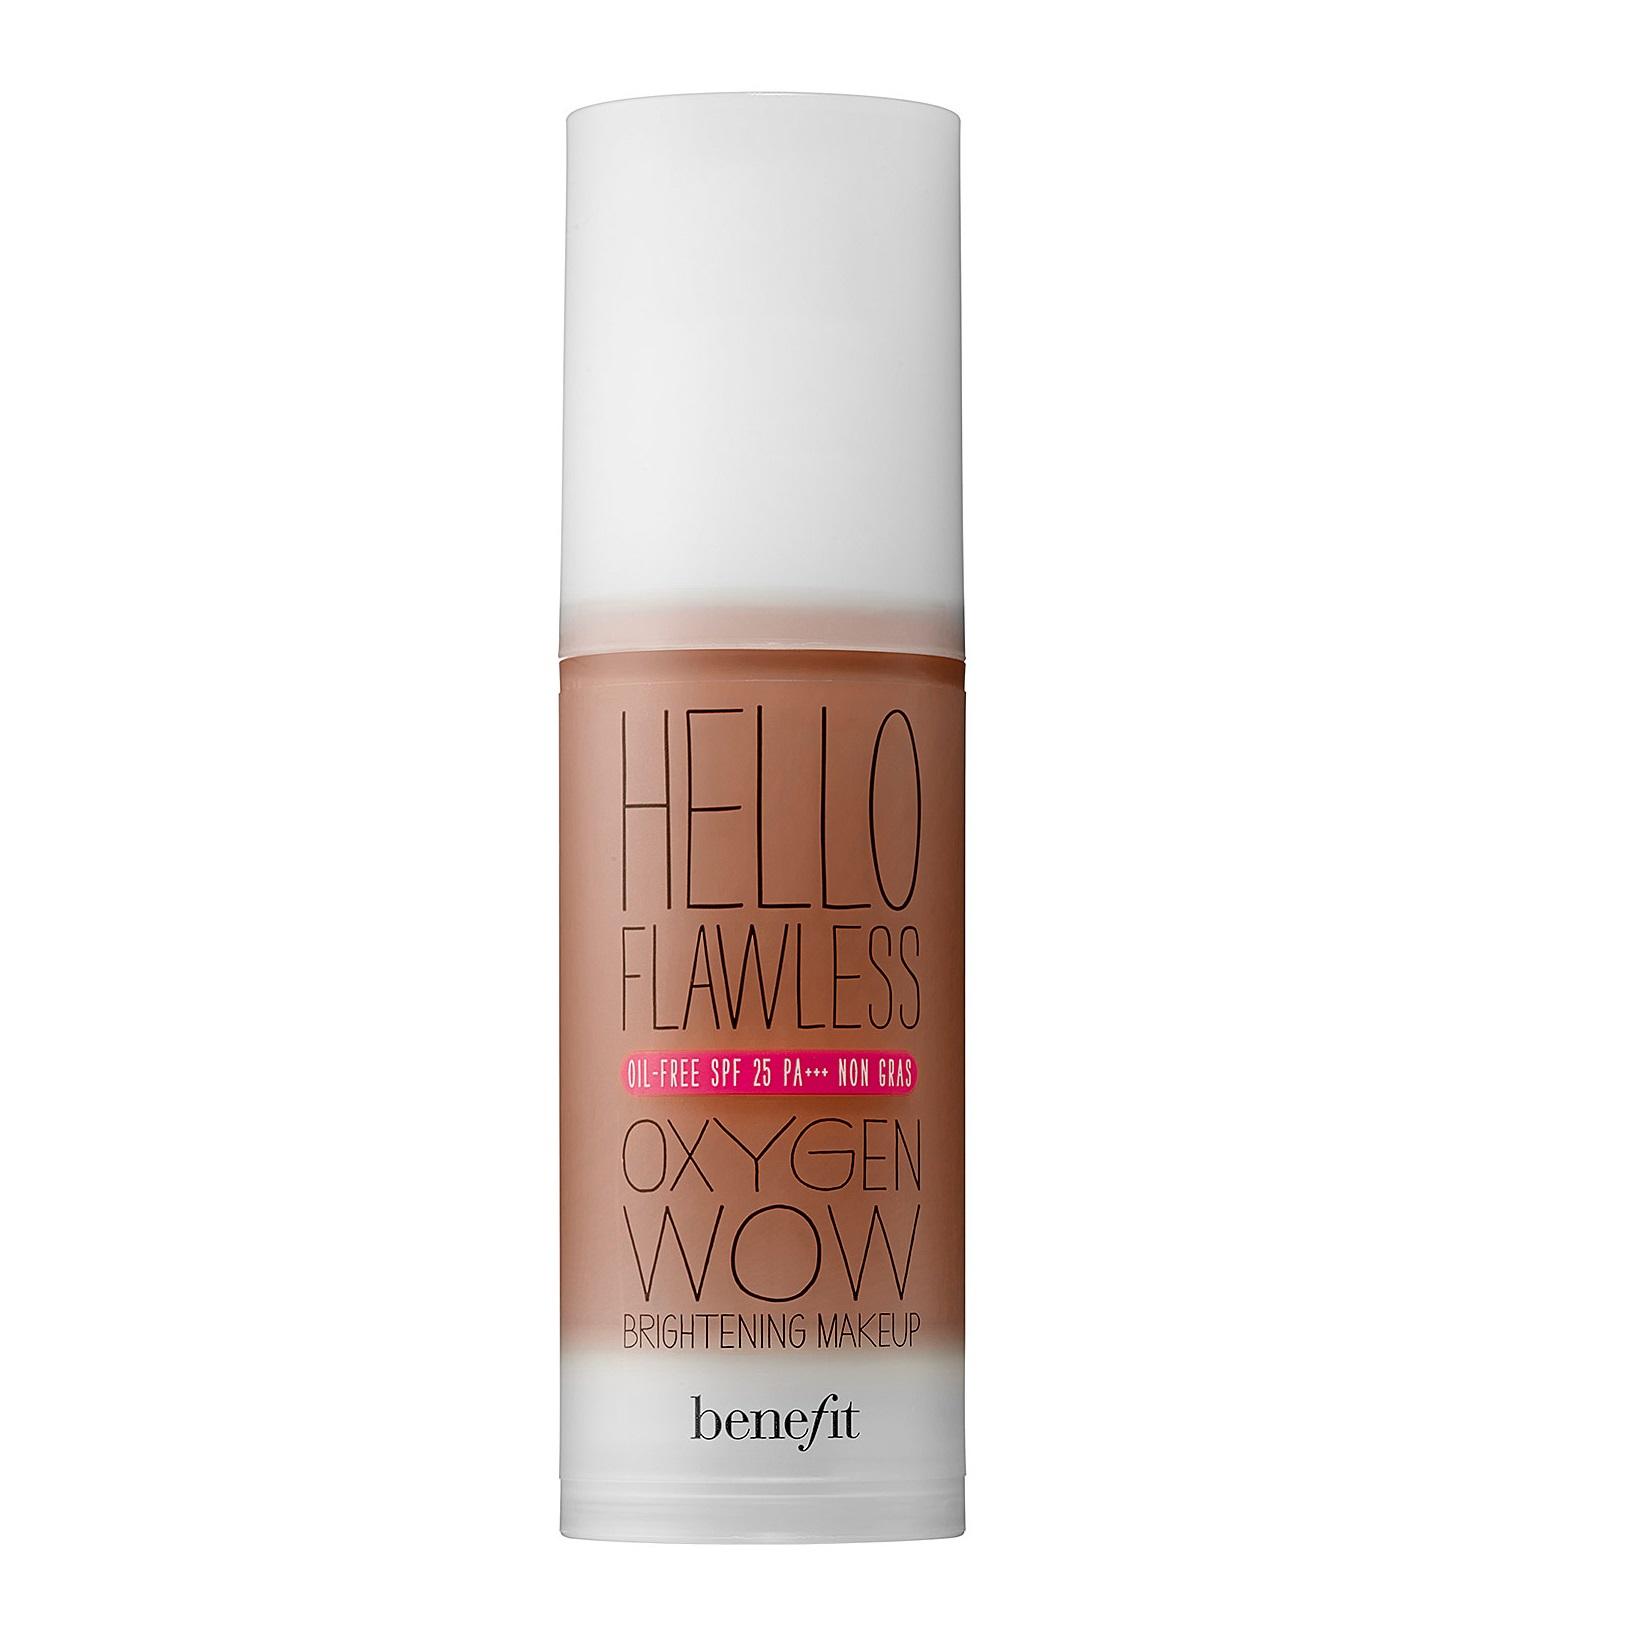 Benefit 'Hello Flawless!' Oxygen Wow Brightening Makeup Nutmeg